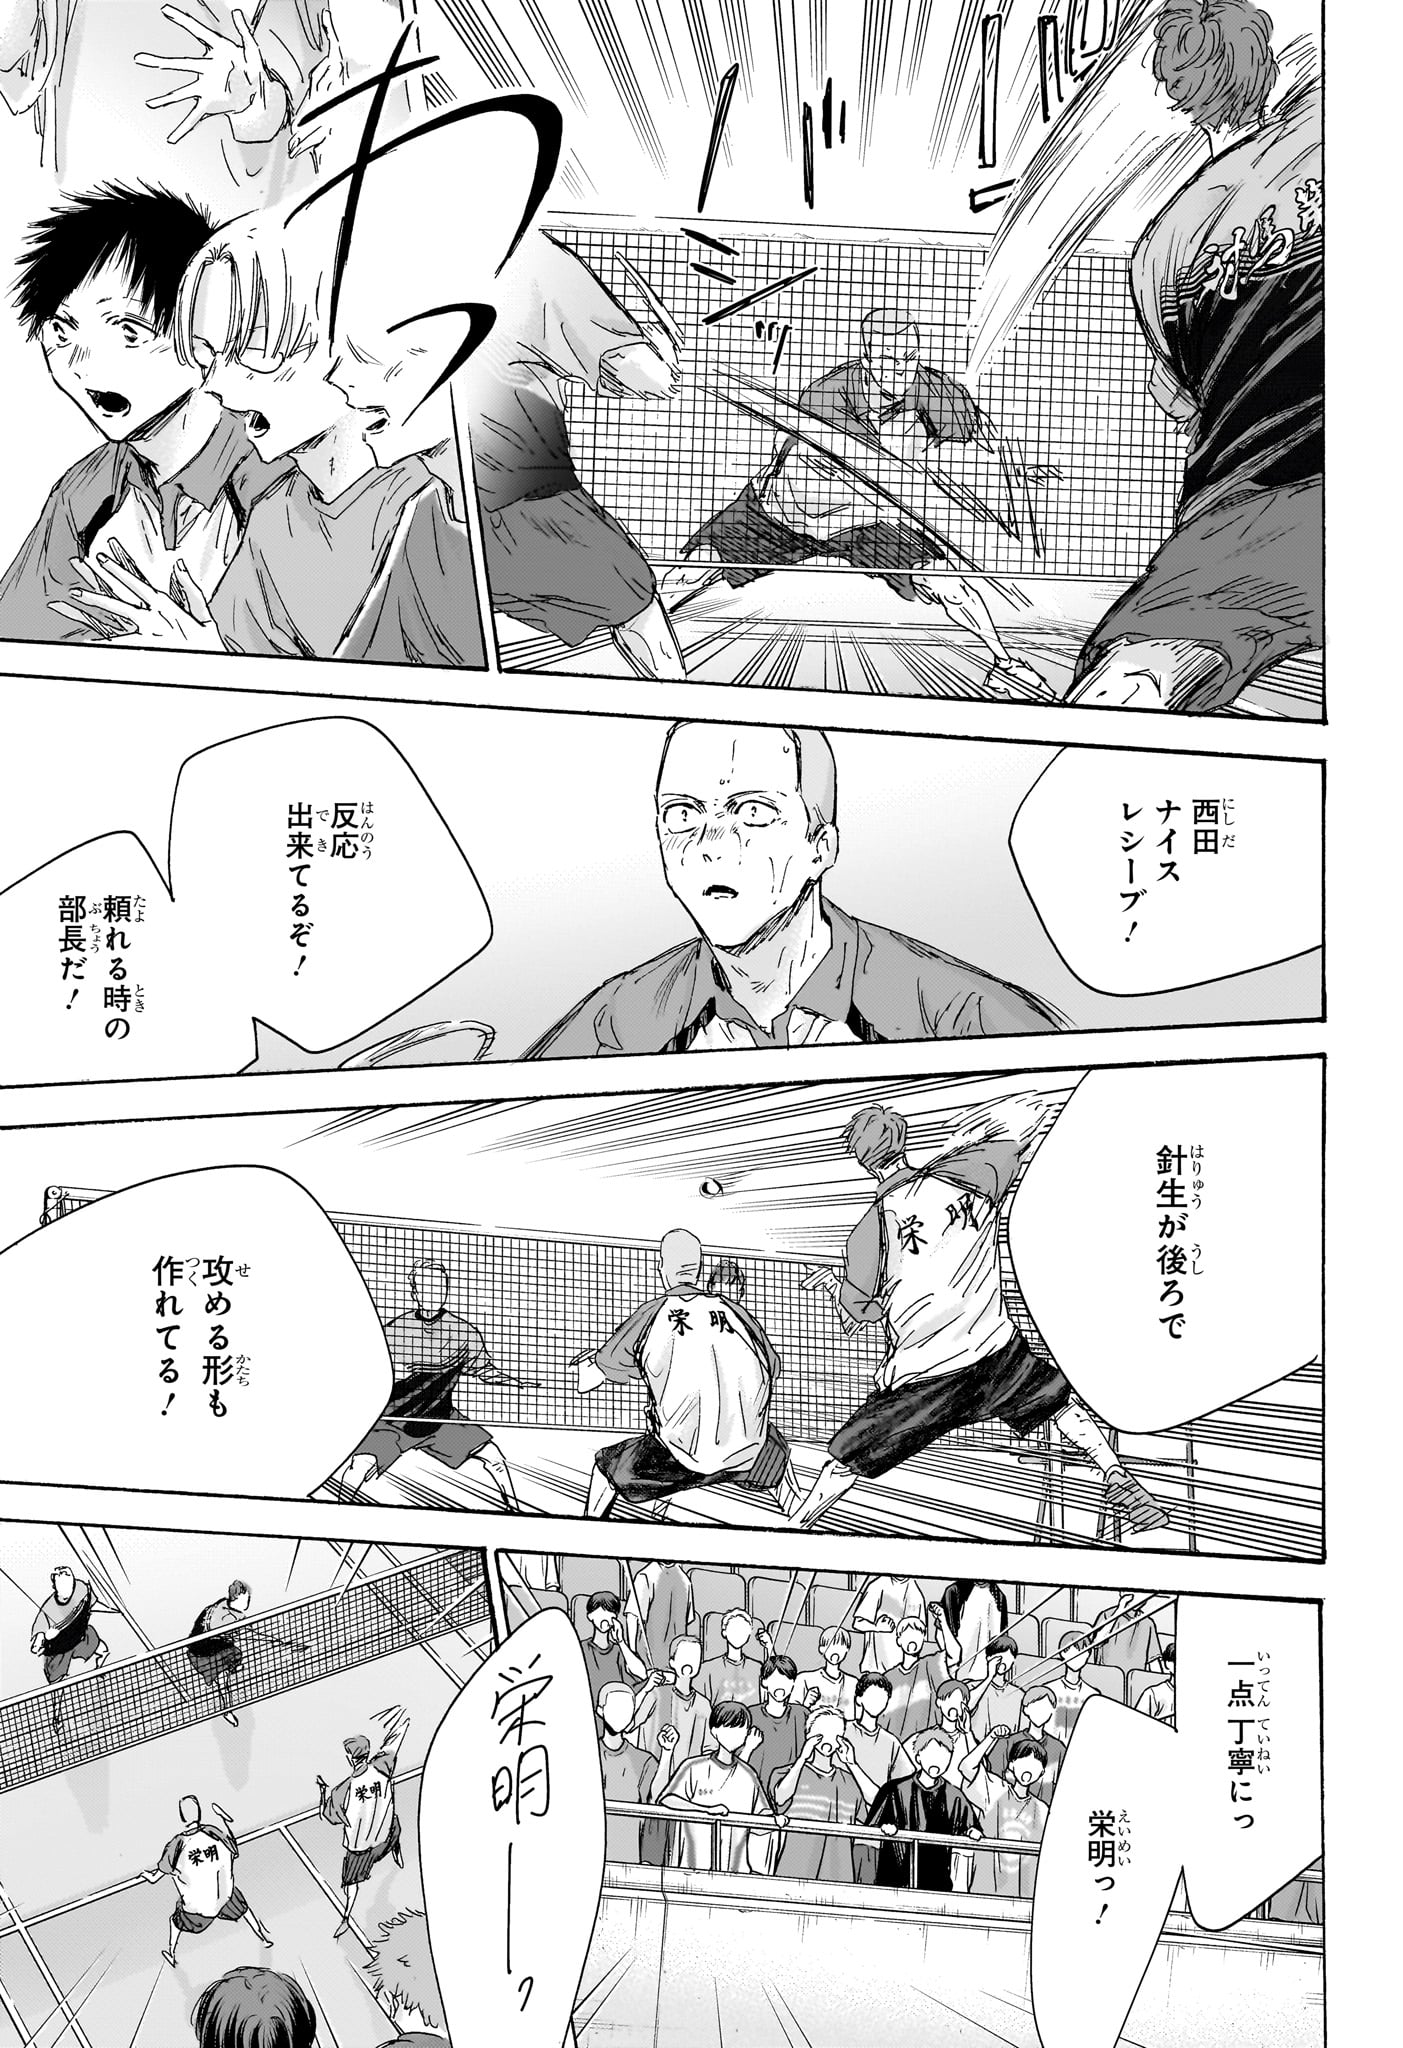 Ao no Hako - Chapter 154 - Page 5